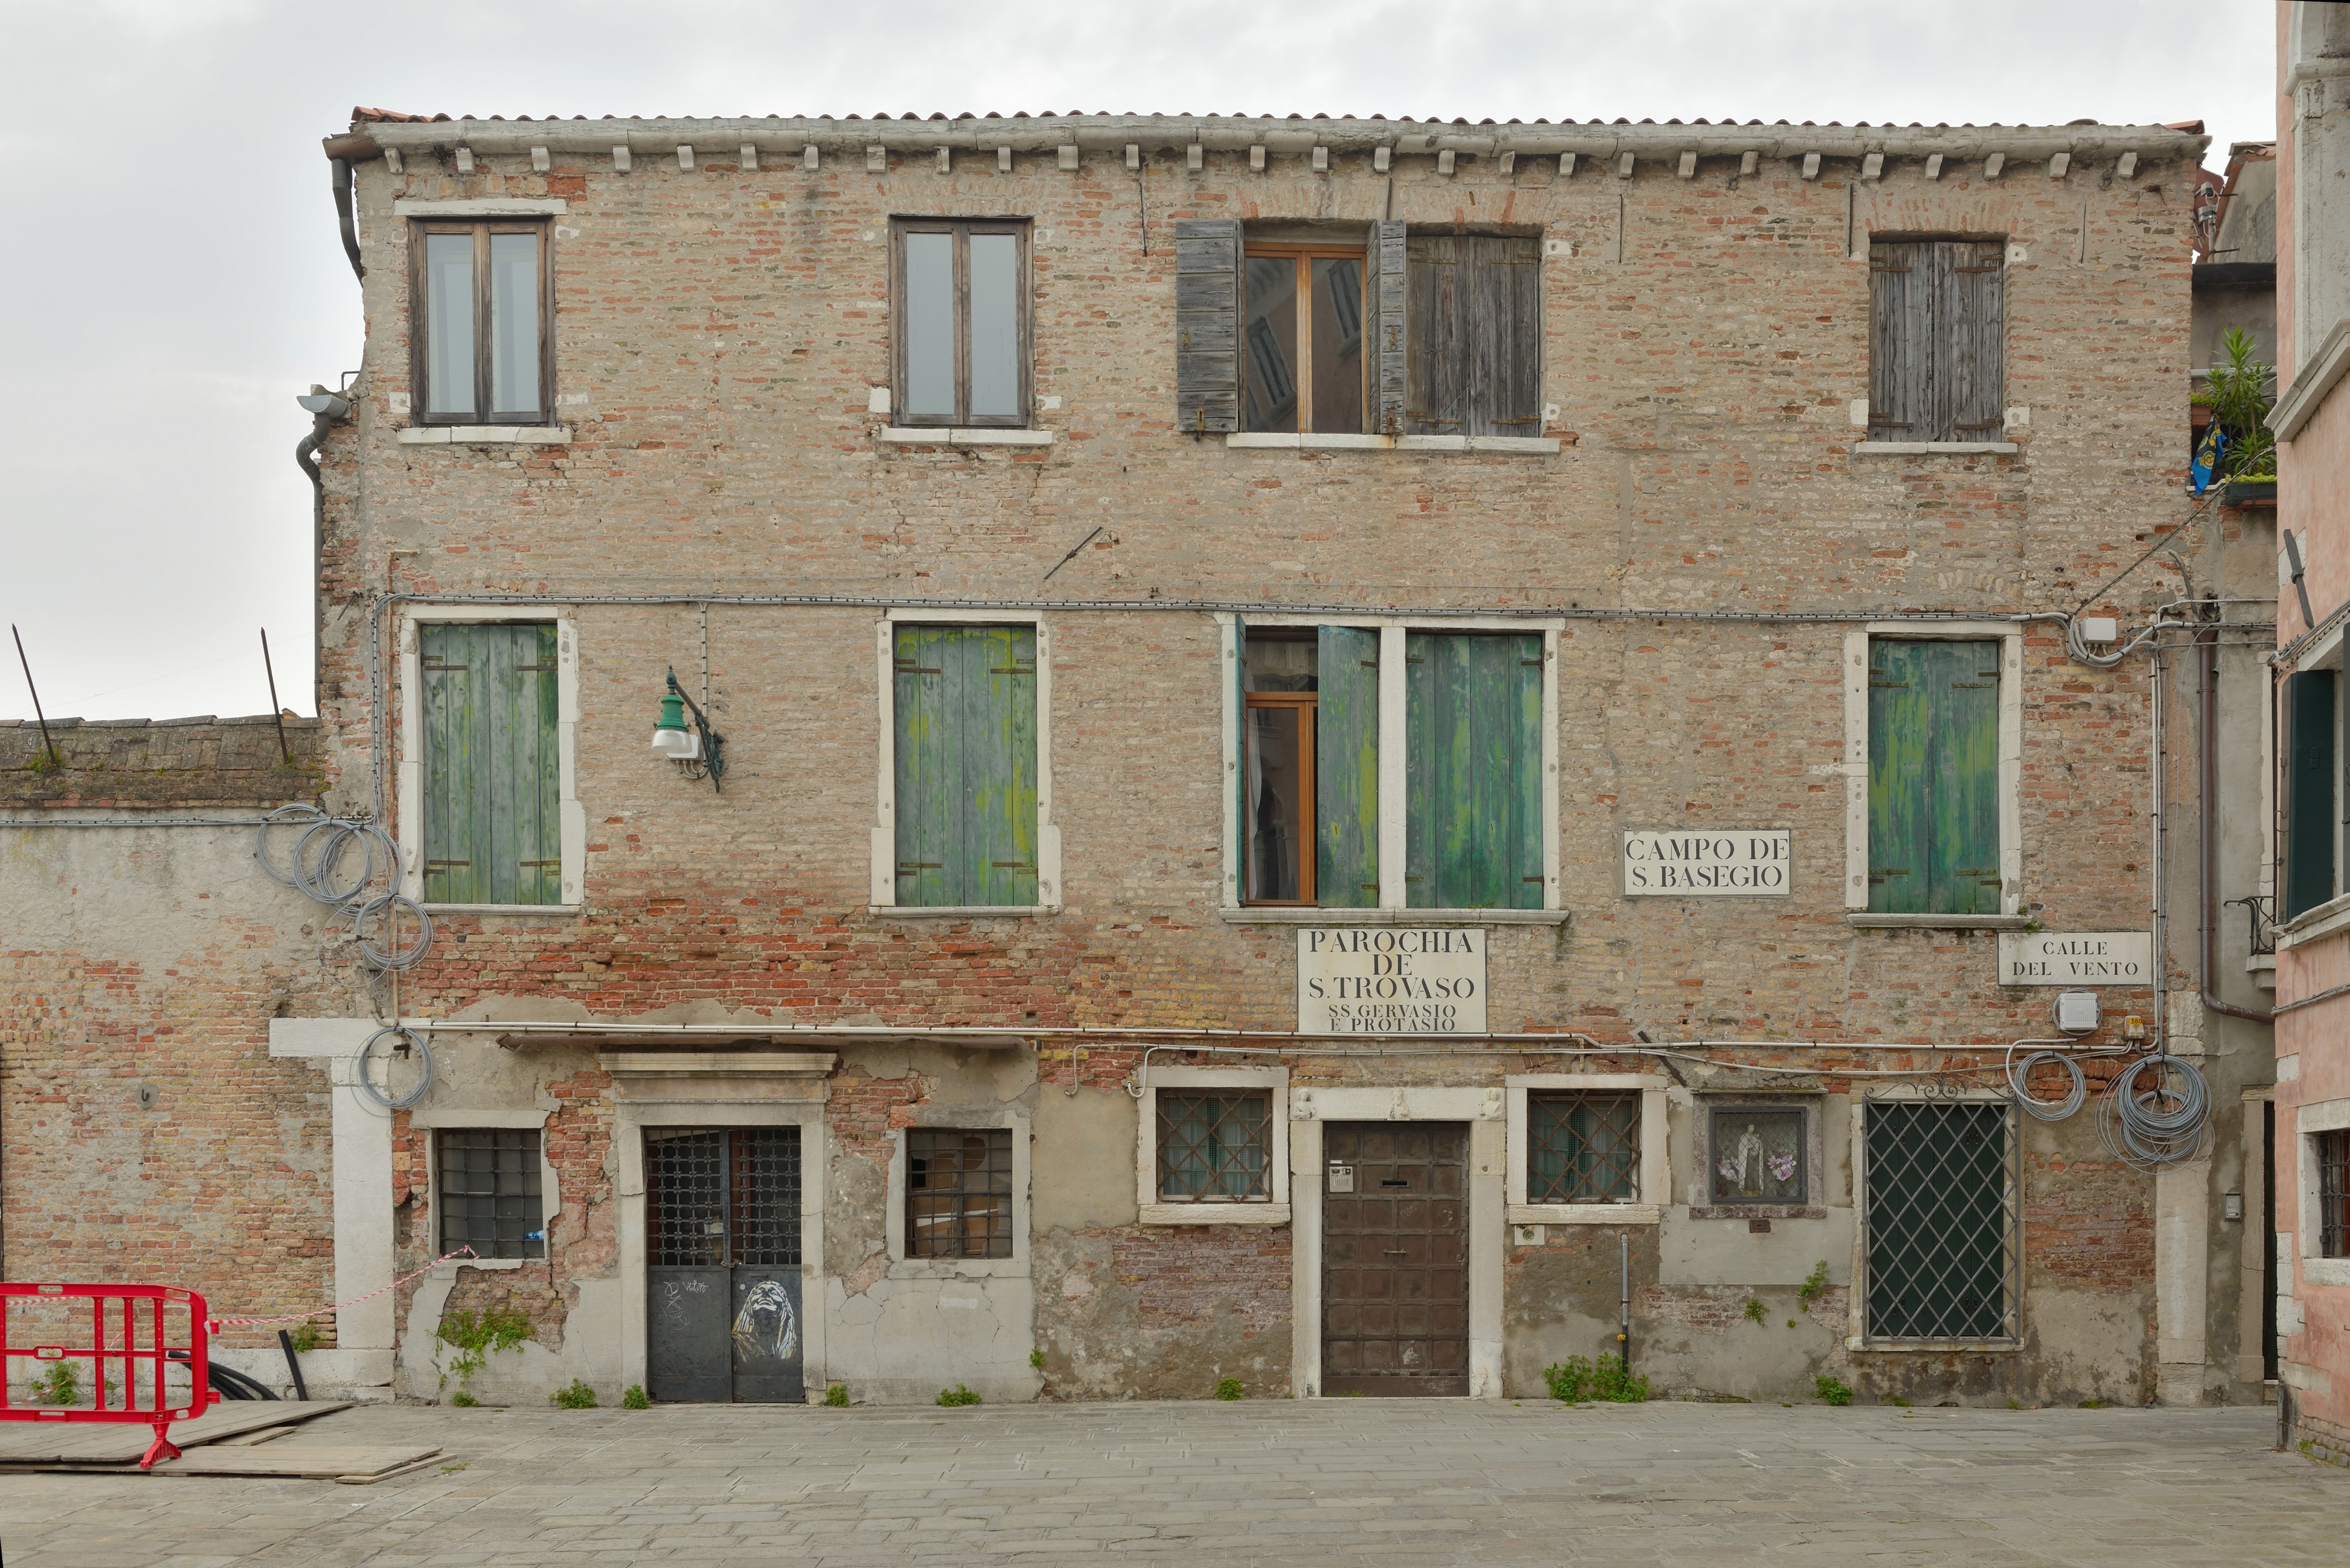 Campo San Basegio aule universitá a Venezia